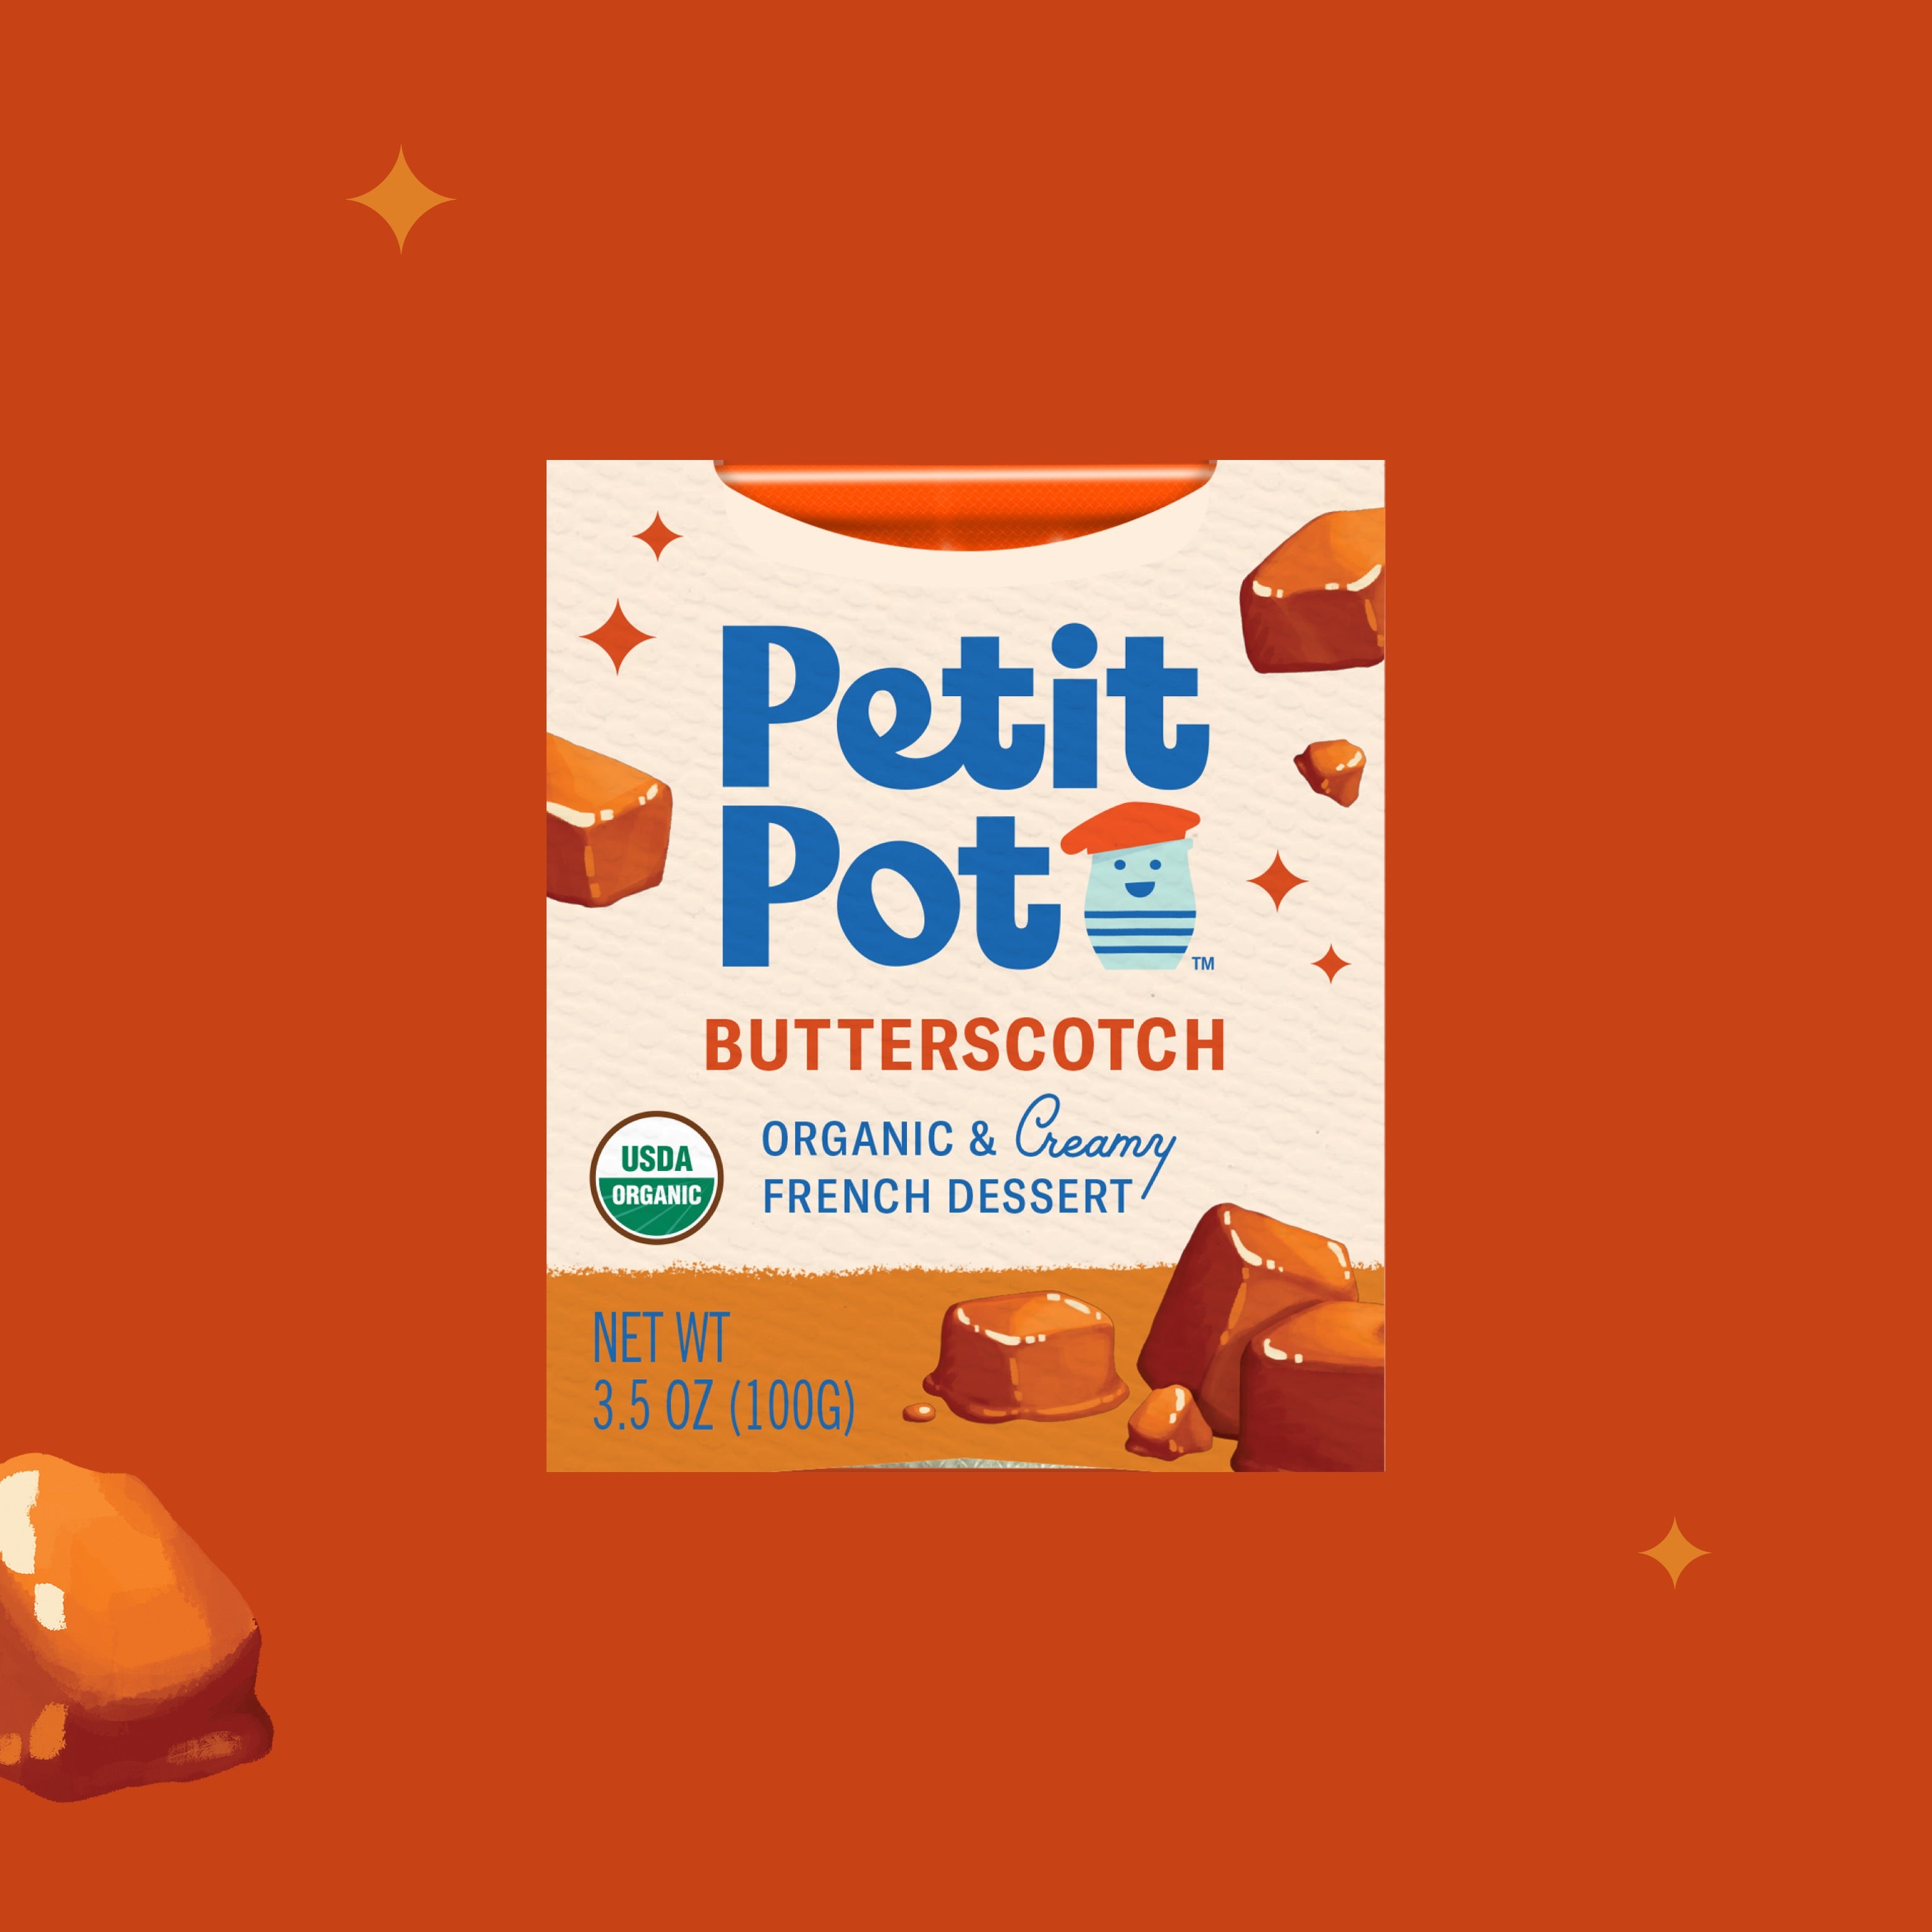 New Petit Pot Sweet Treats, 2017-03-15